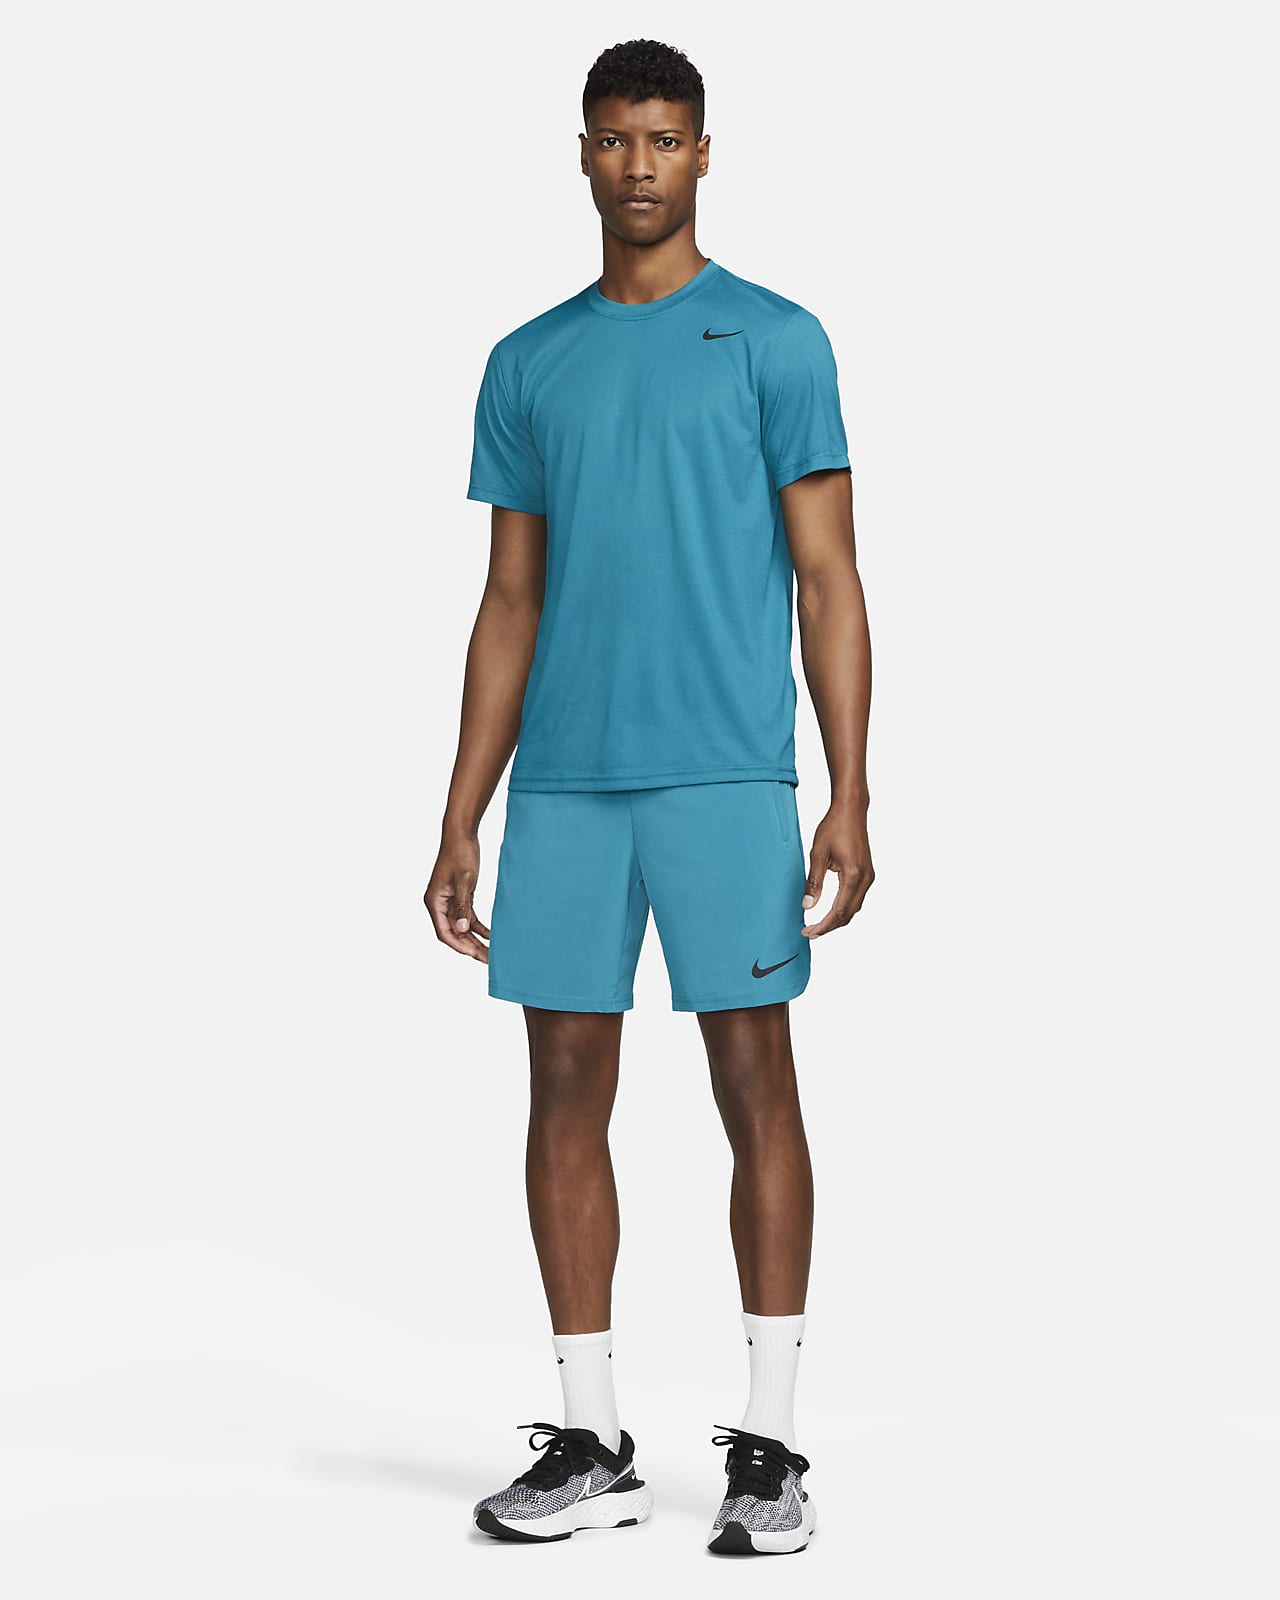 Nike Pro Dri-FIT Flex Vent Max Men's 8